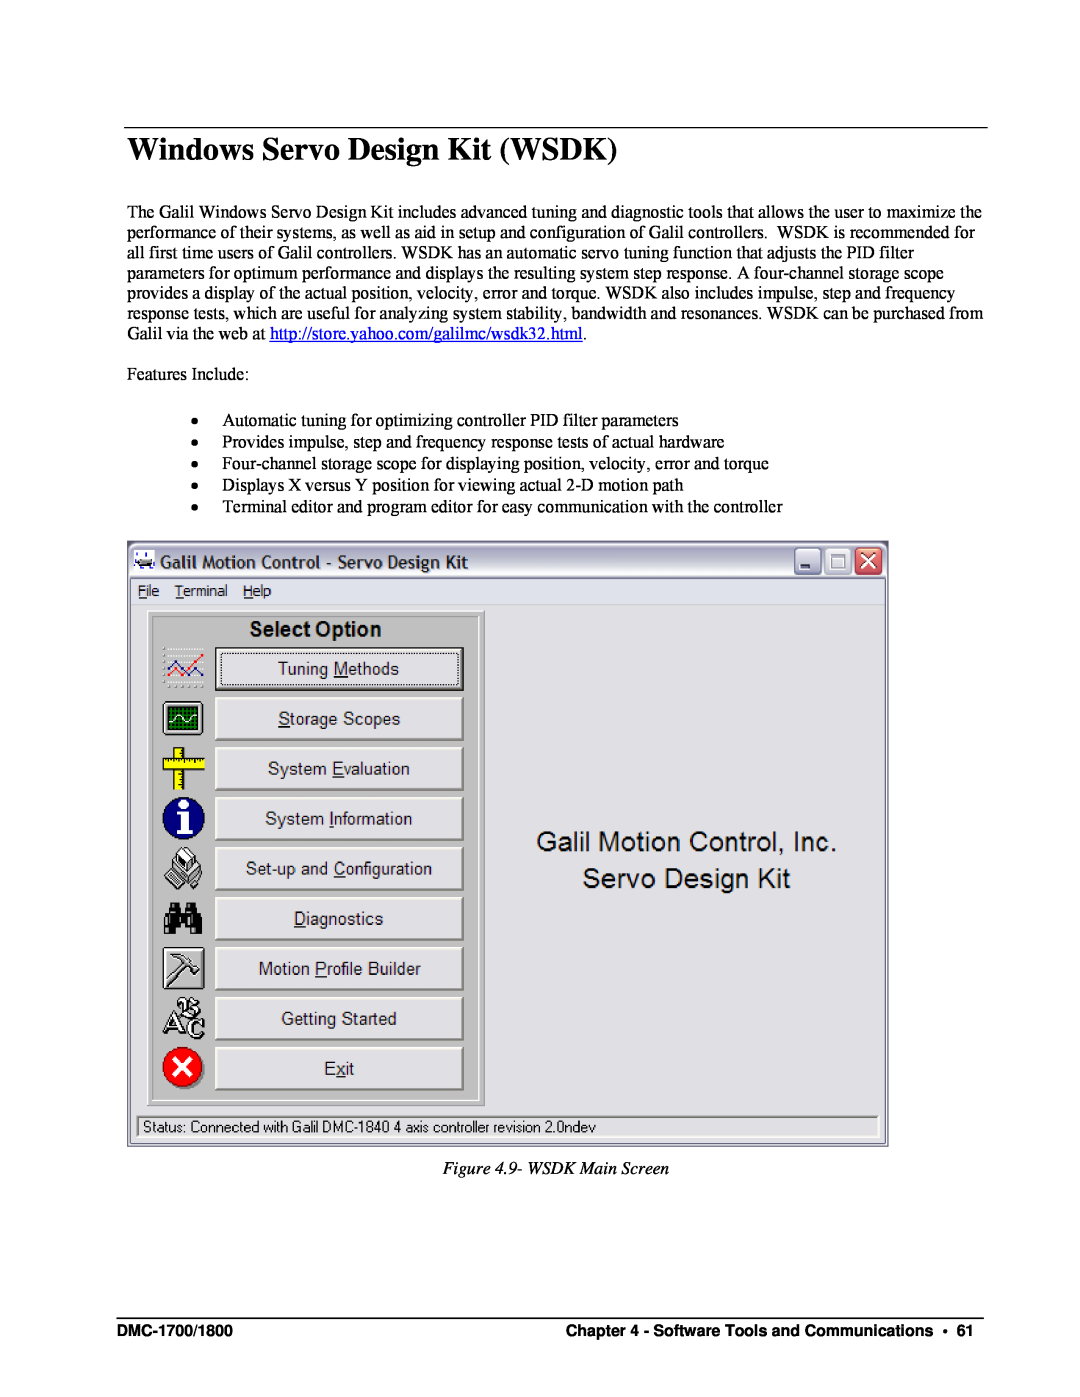 Galil DMC-1700, DMC-1800 user manual Windows Servo Design Kit WSDK, 9- WSDK Main Screen 